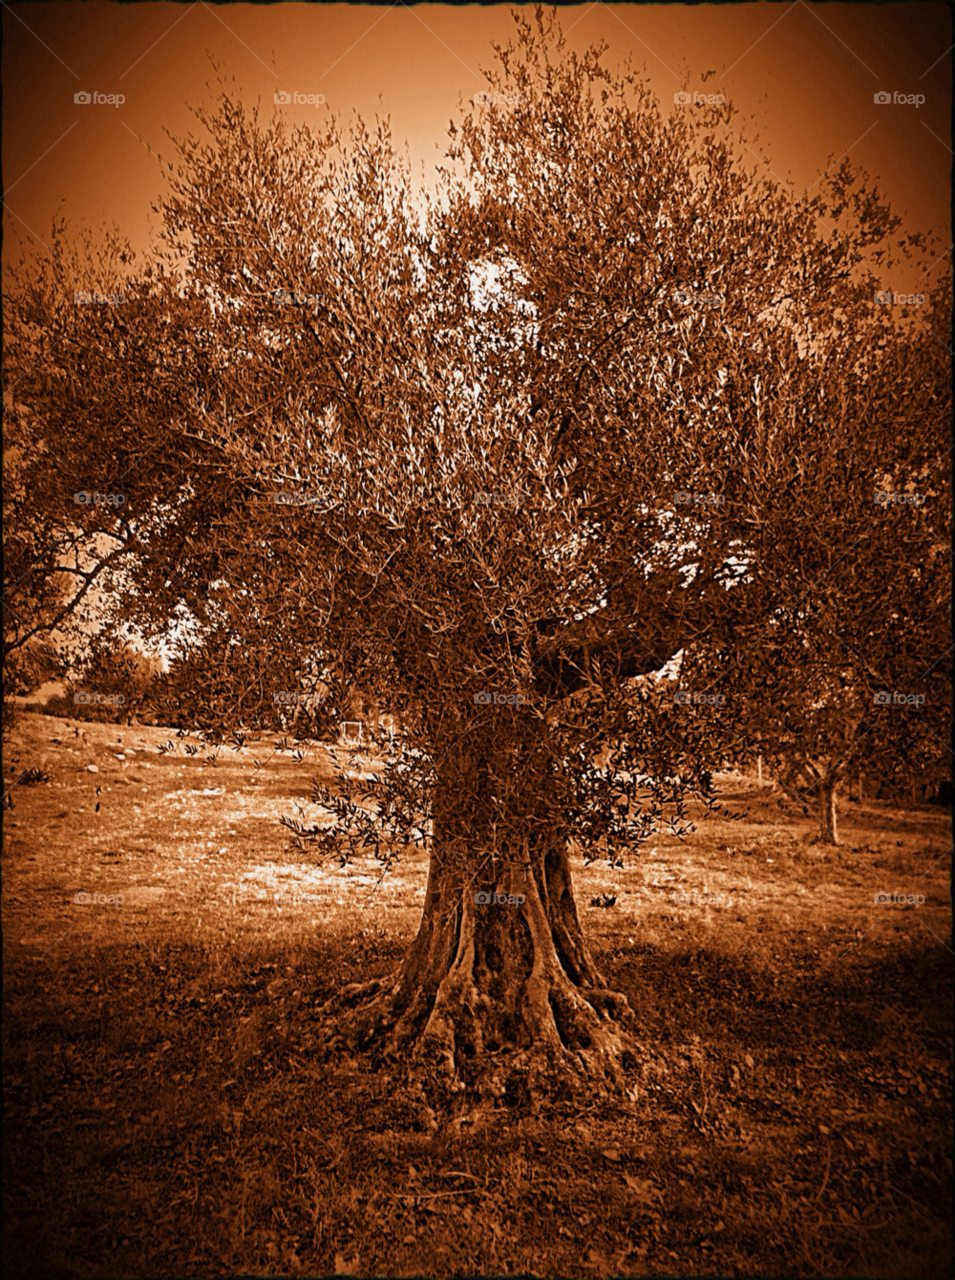 greece village olive tree by gsar1